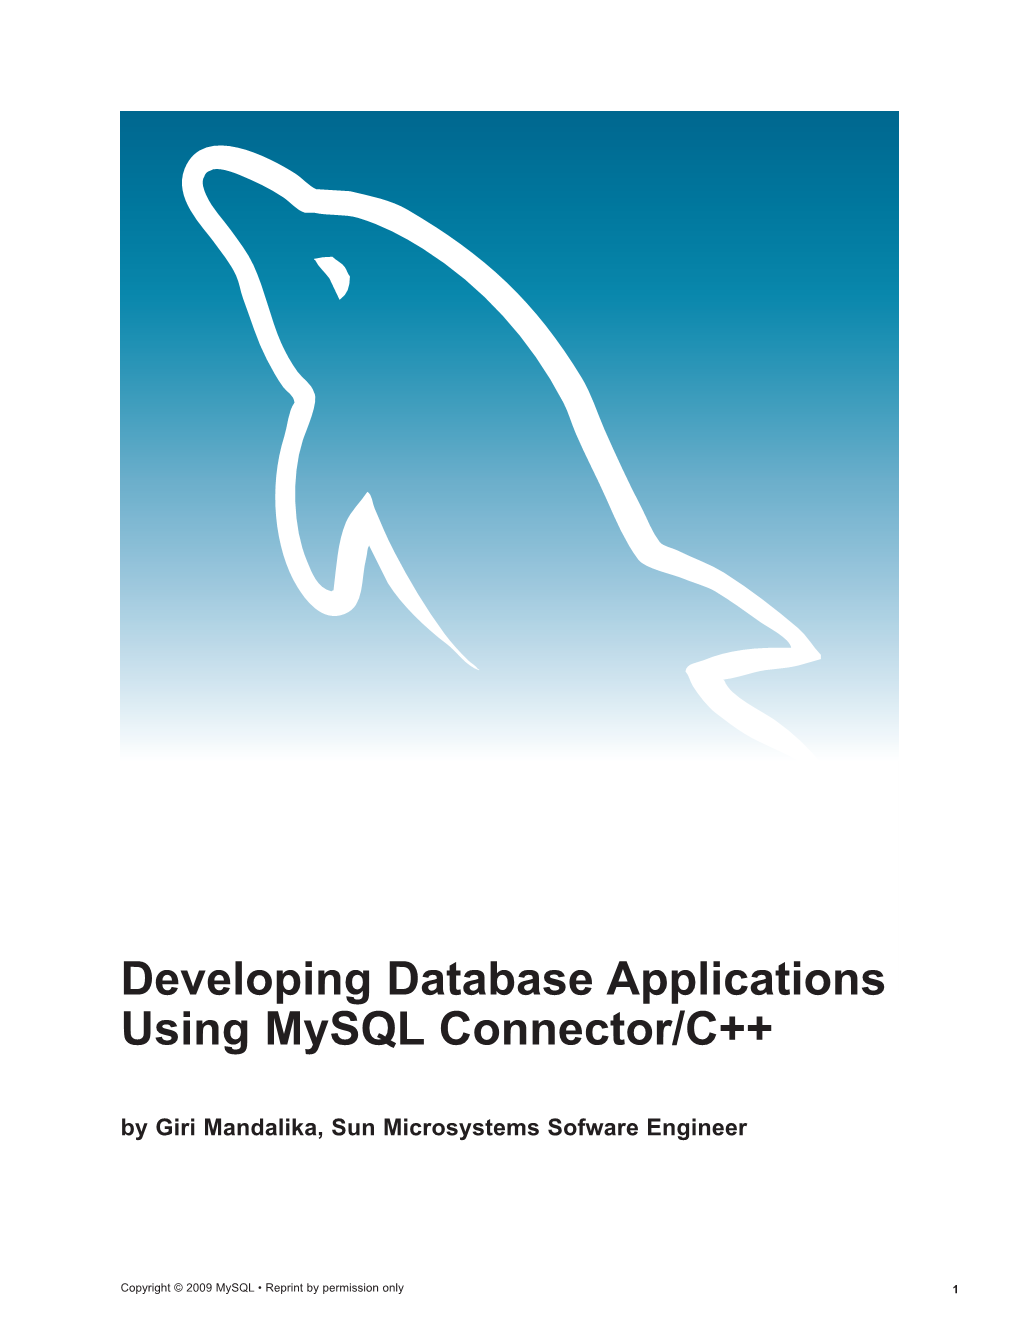 Developing Database Applications Using Mysql Connector/C++ by Giri Mandalika, Sun Microsystems Sofware Engineer